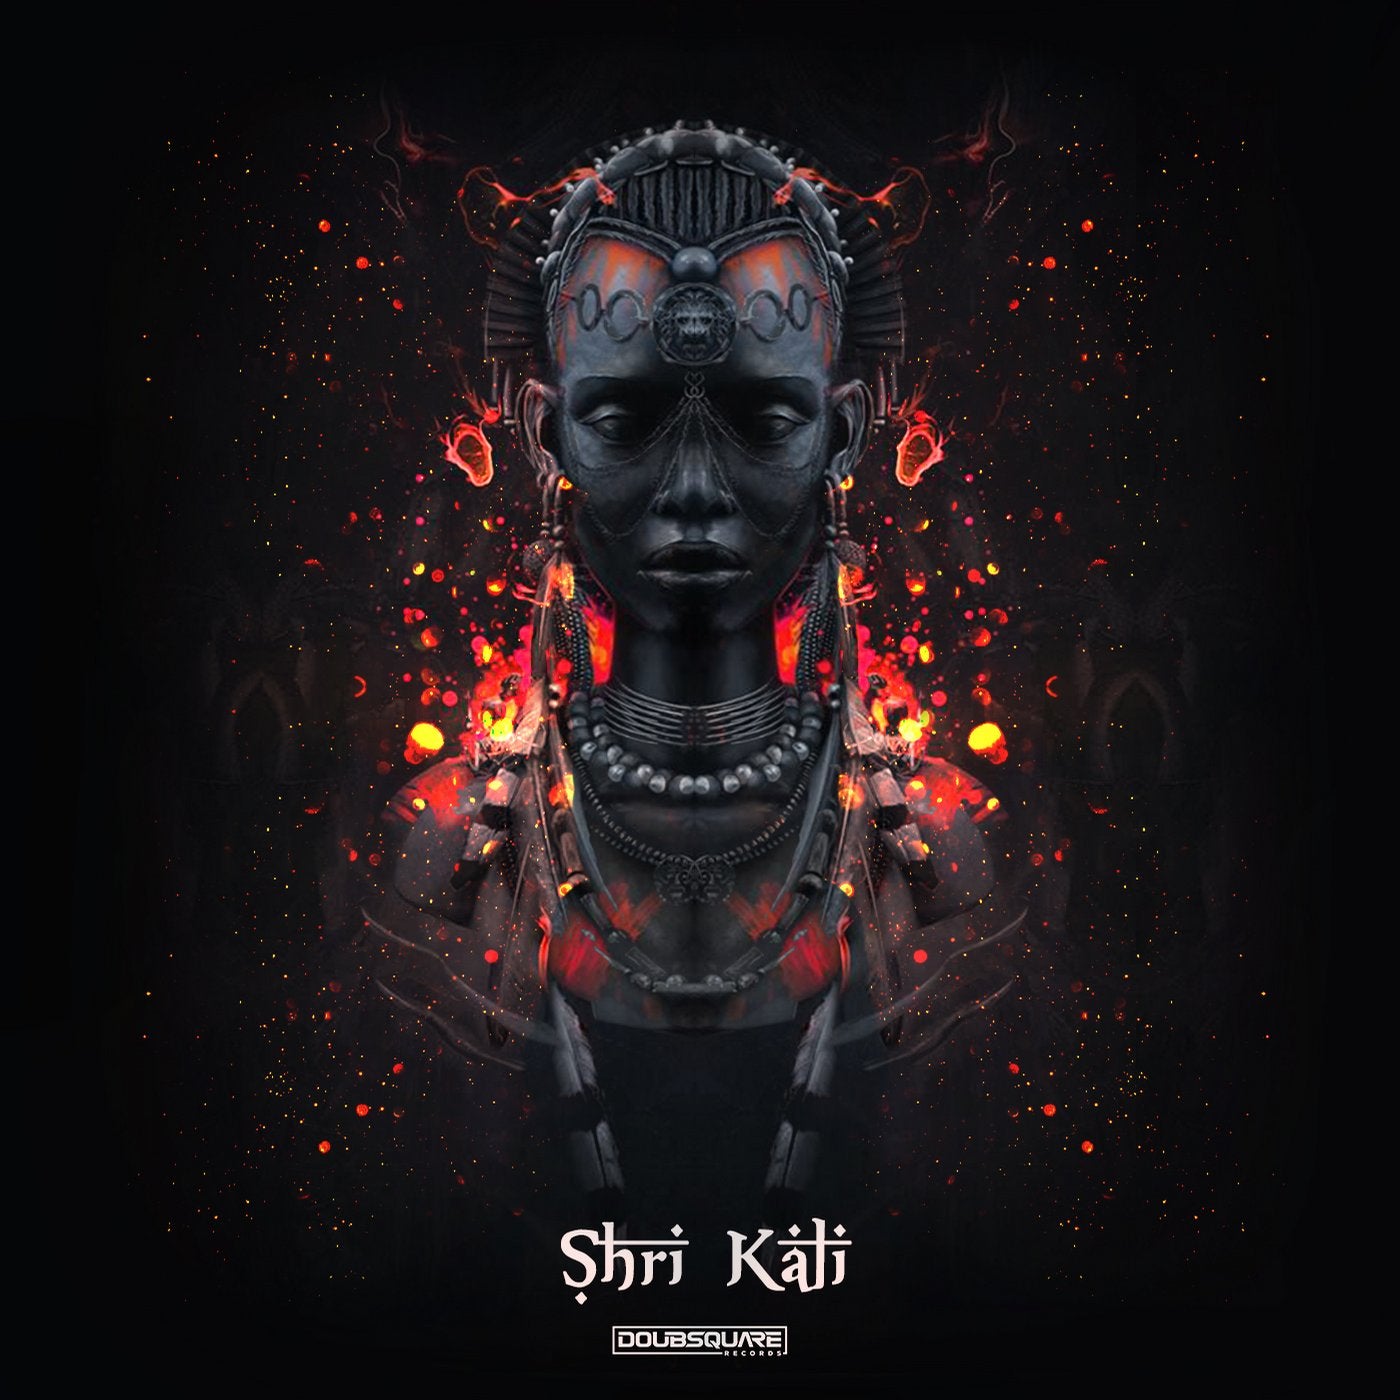 Shri Kali